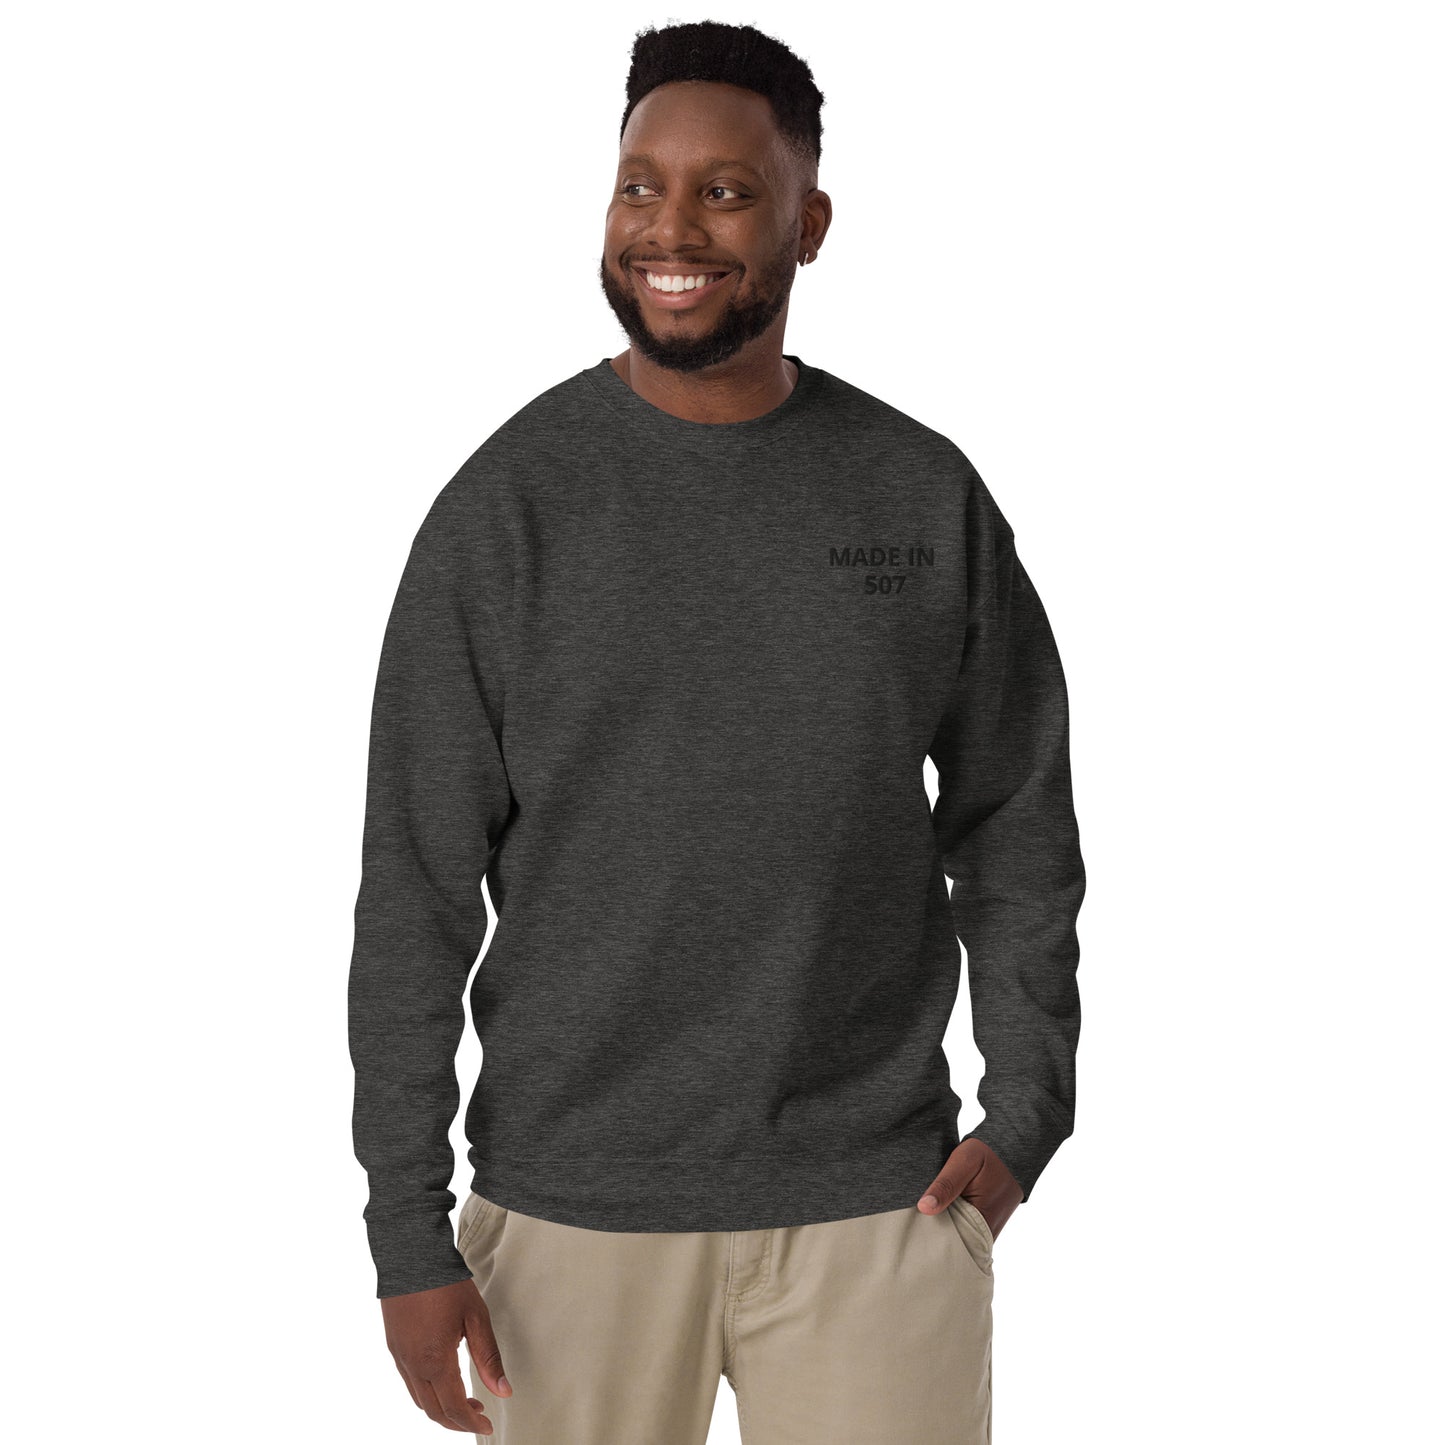 Made In 507 Unisex Sweatshirt